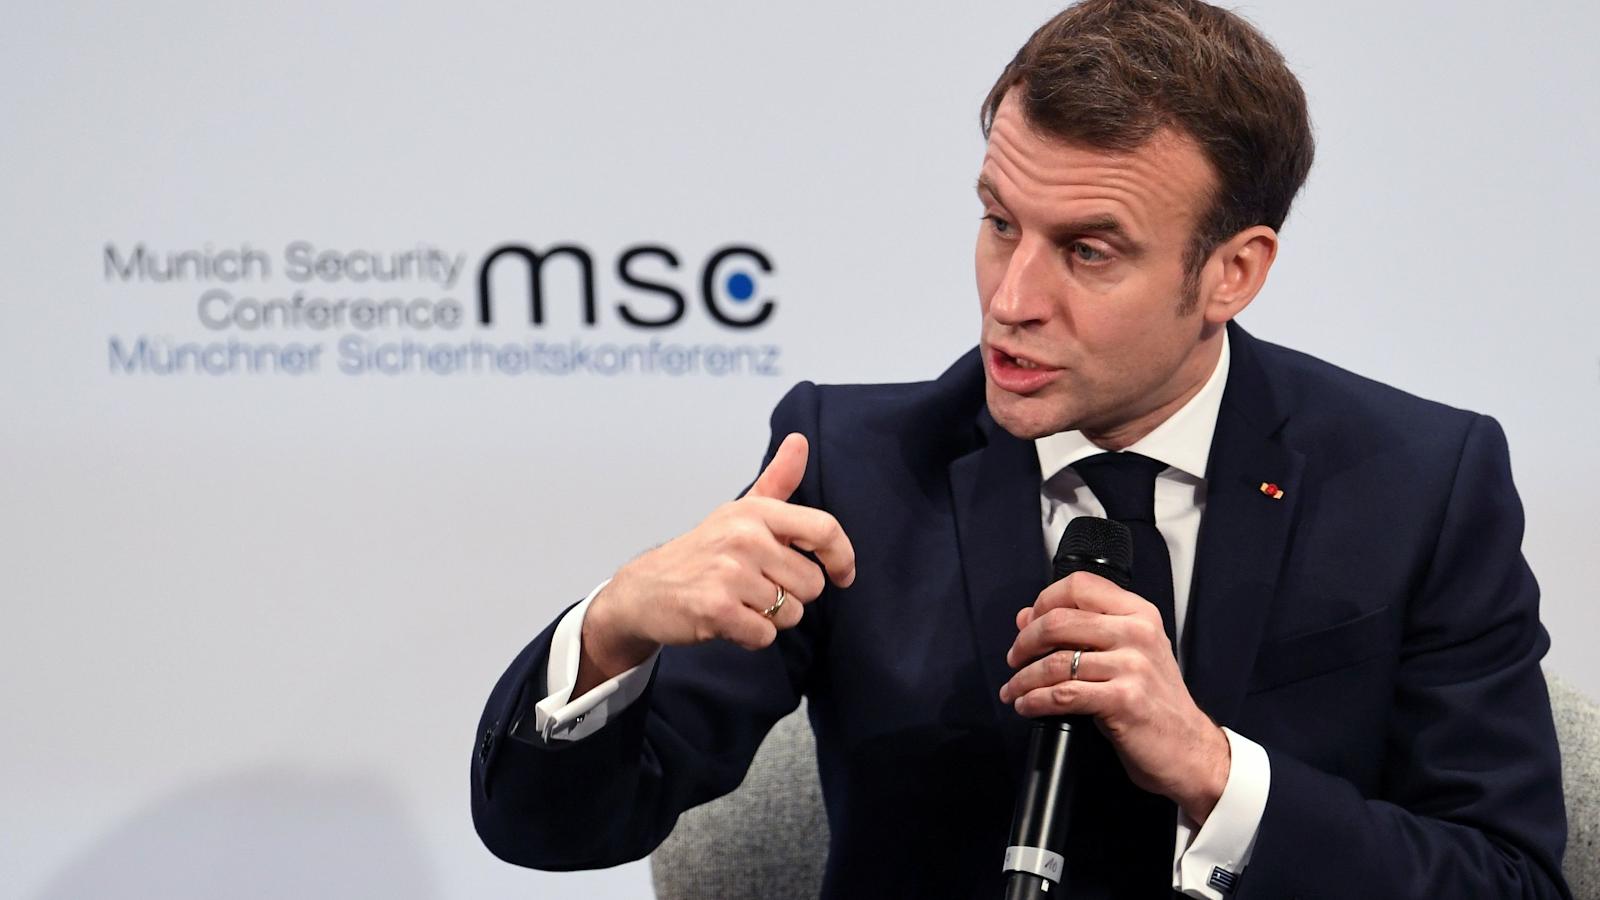 Macron: Many people lost faith in democracy